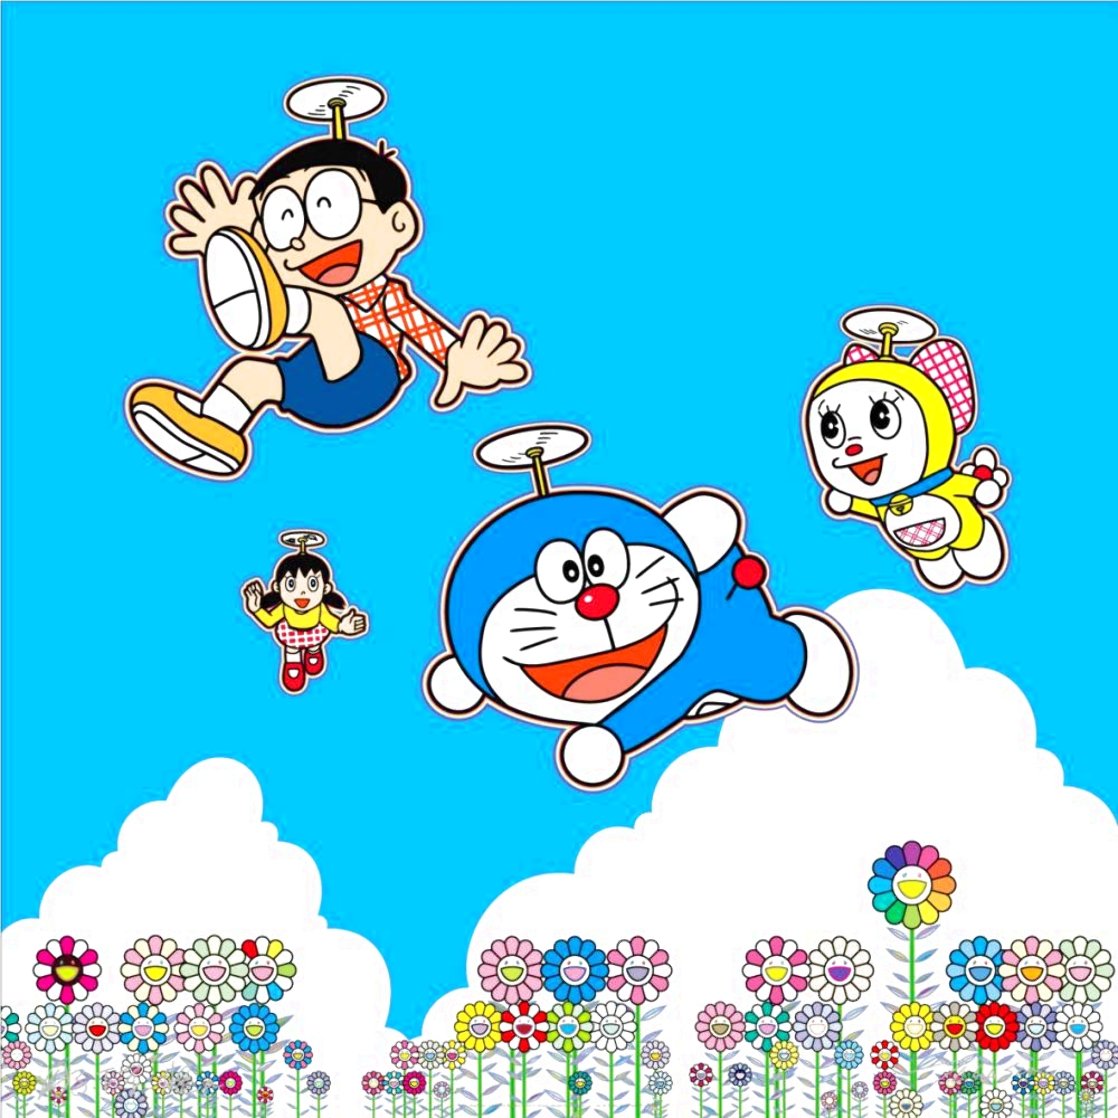 Doraemon So Much Fun, Under the Blue Sky 2020 Limited Edition Print by Takashi Murakami